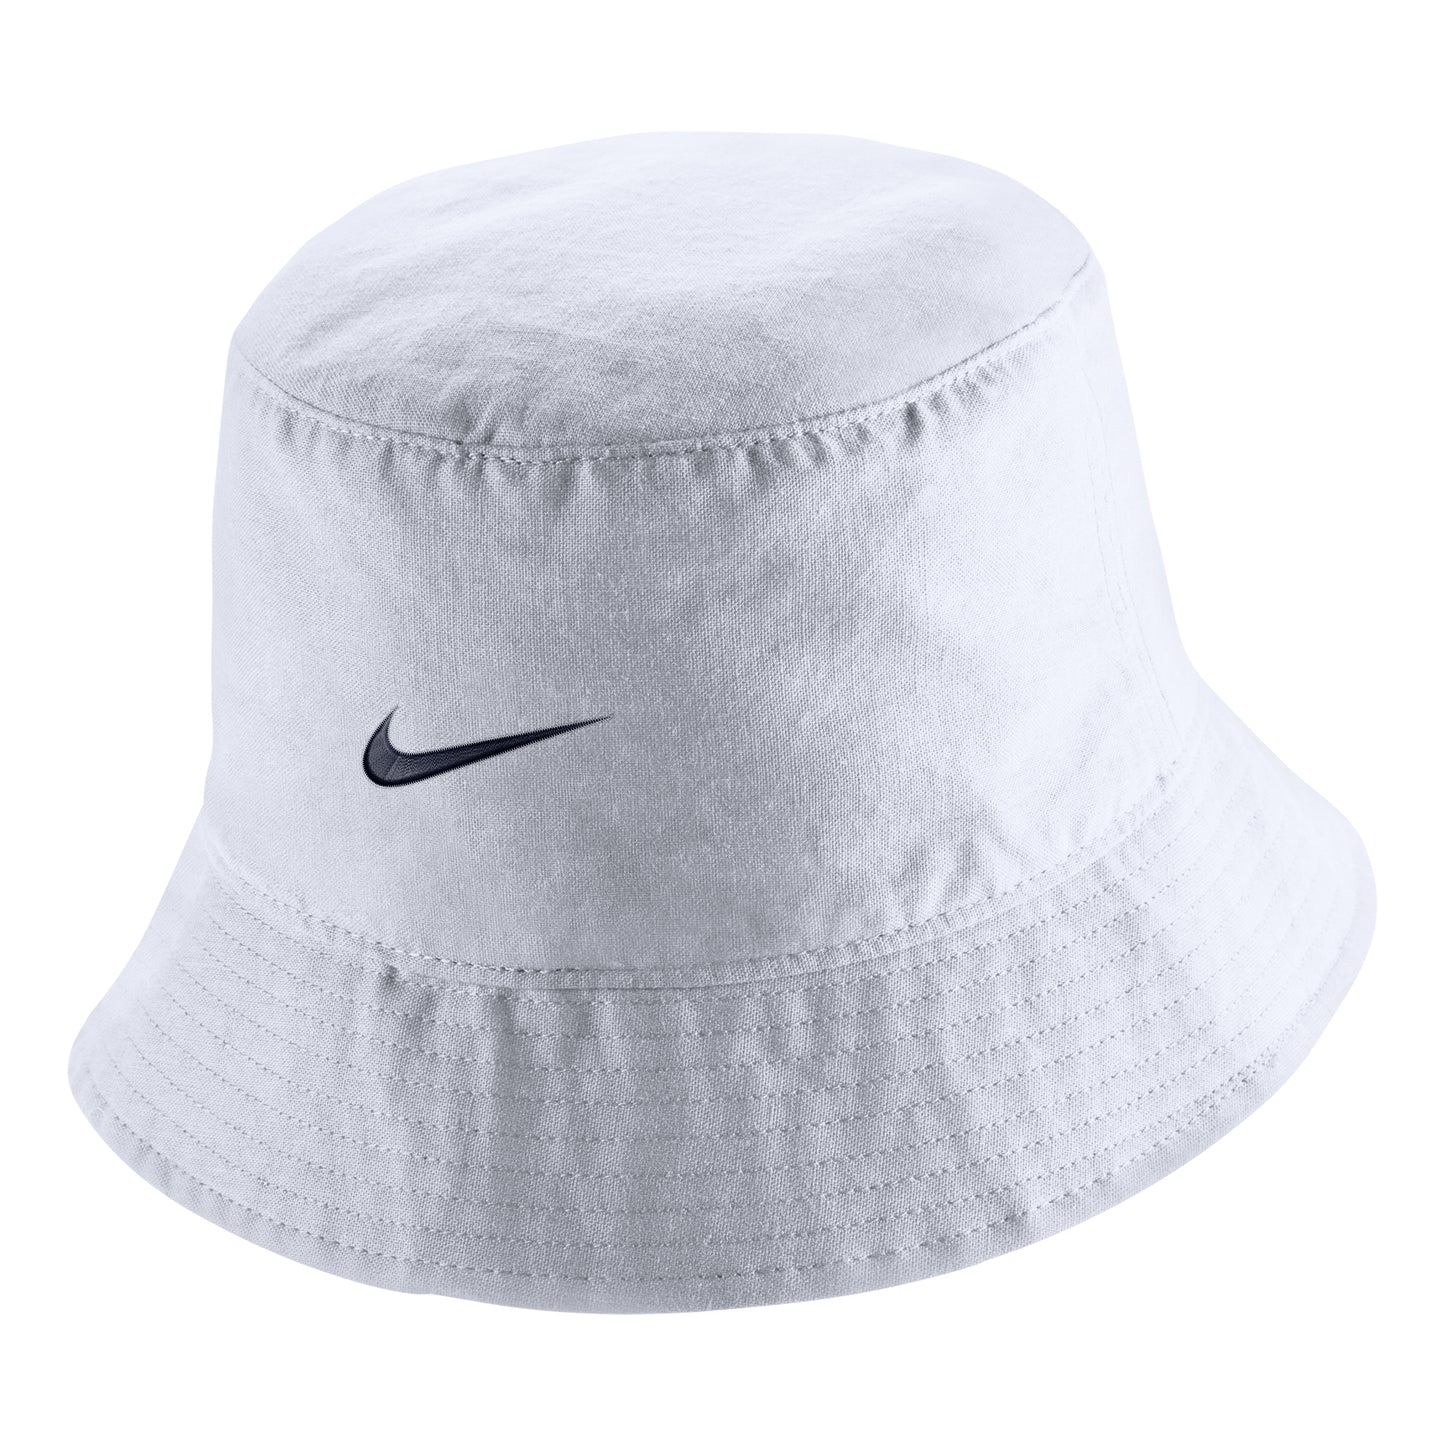 U.C. Berkeley Cal embroidered Nike bucket hat-White-Shop College Wear